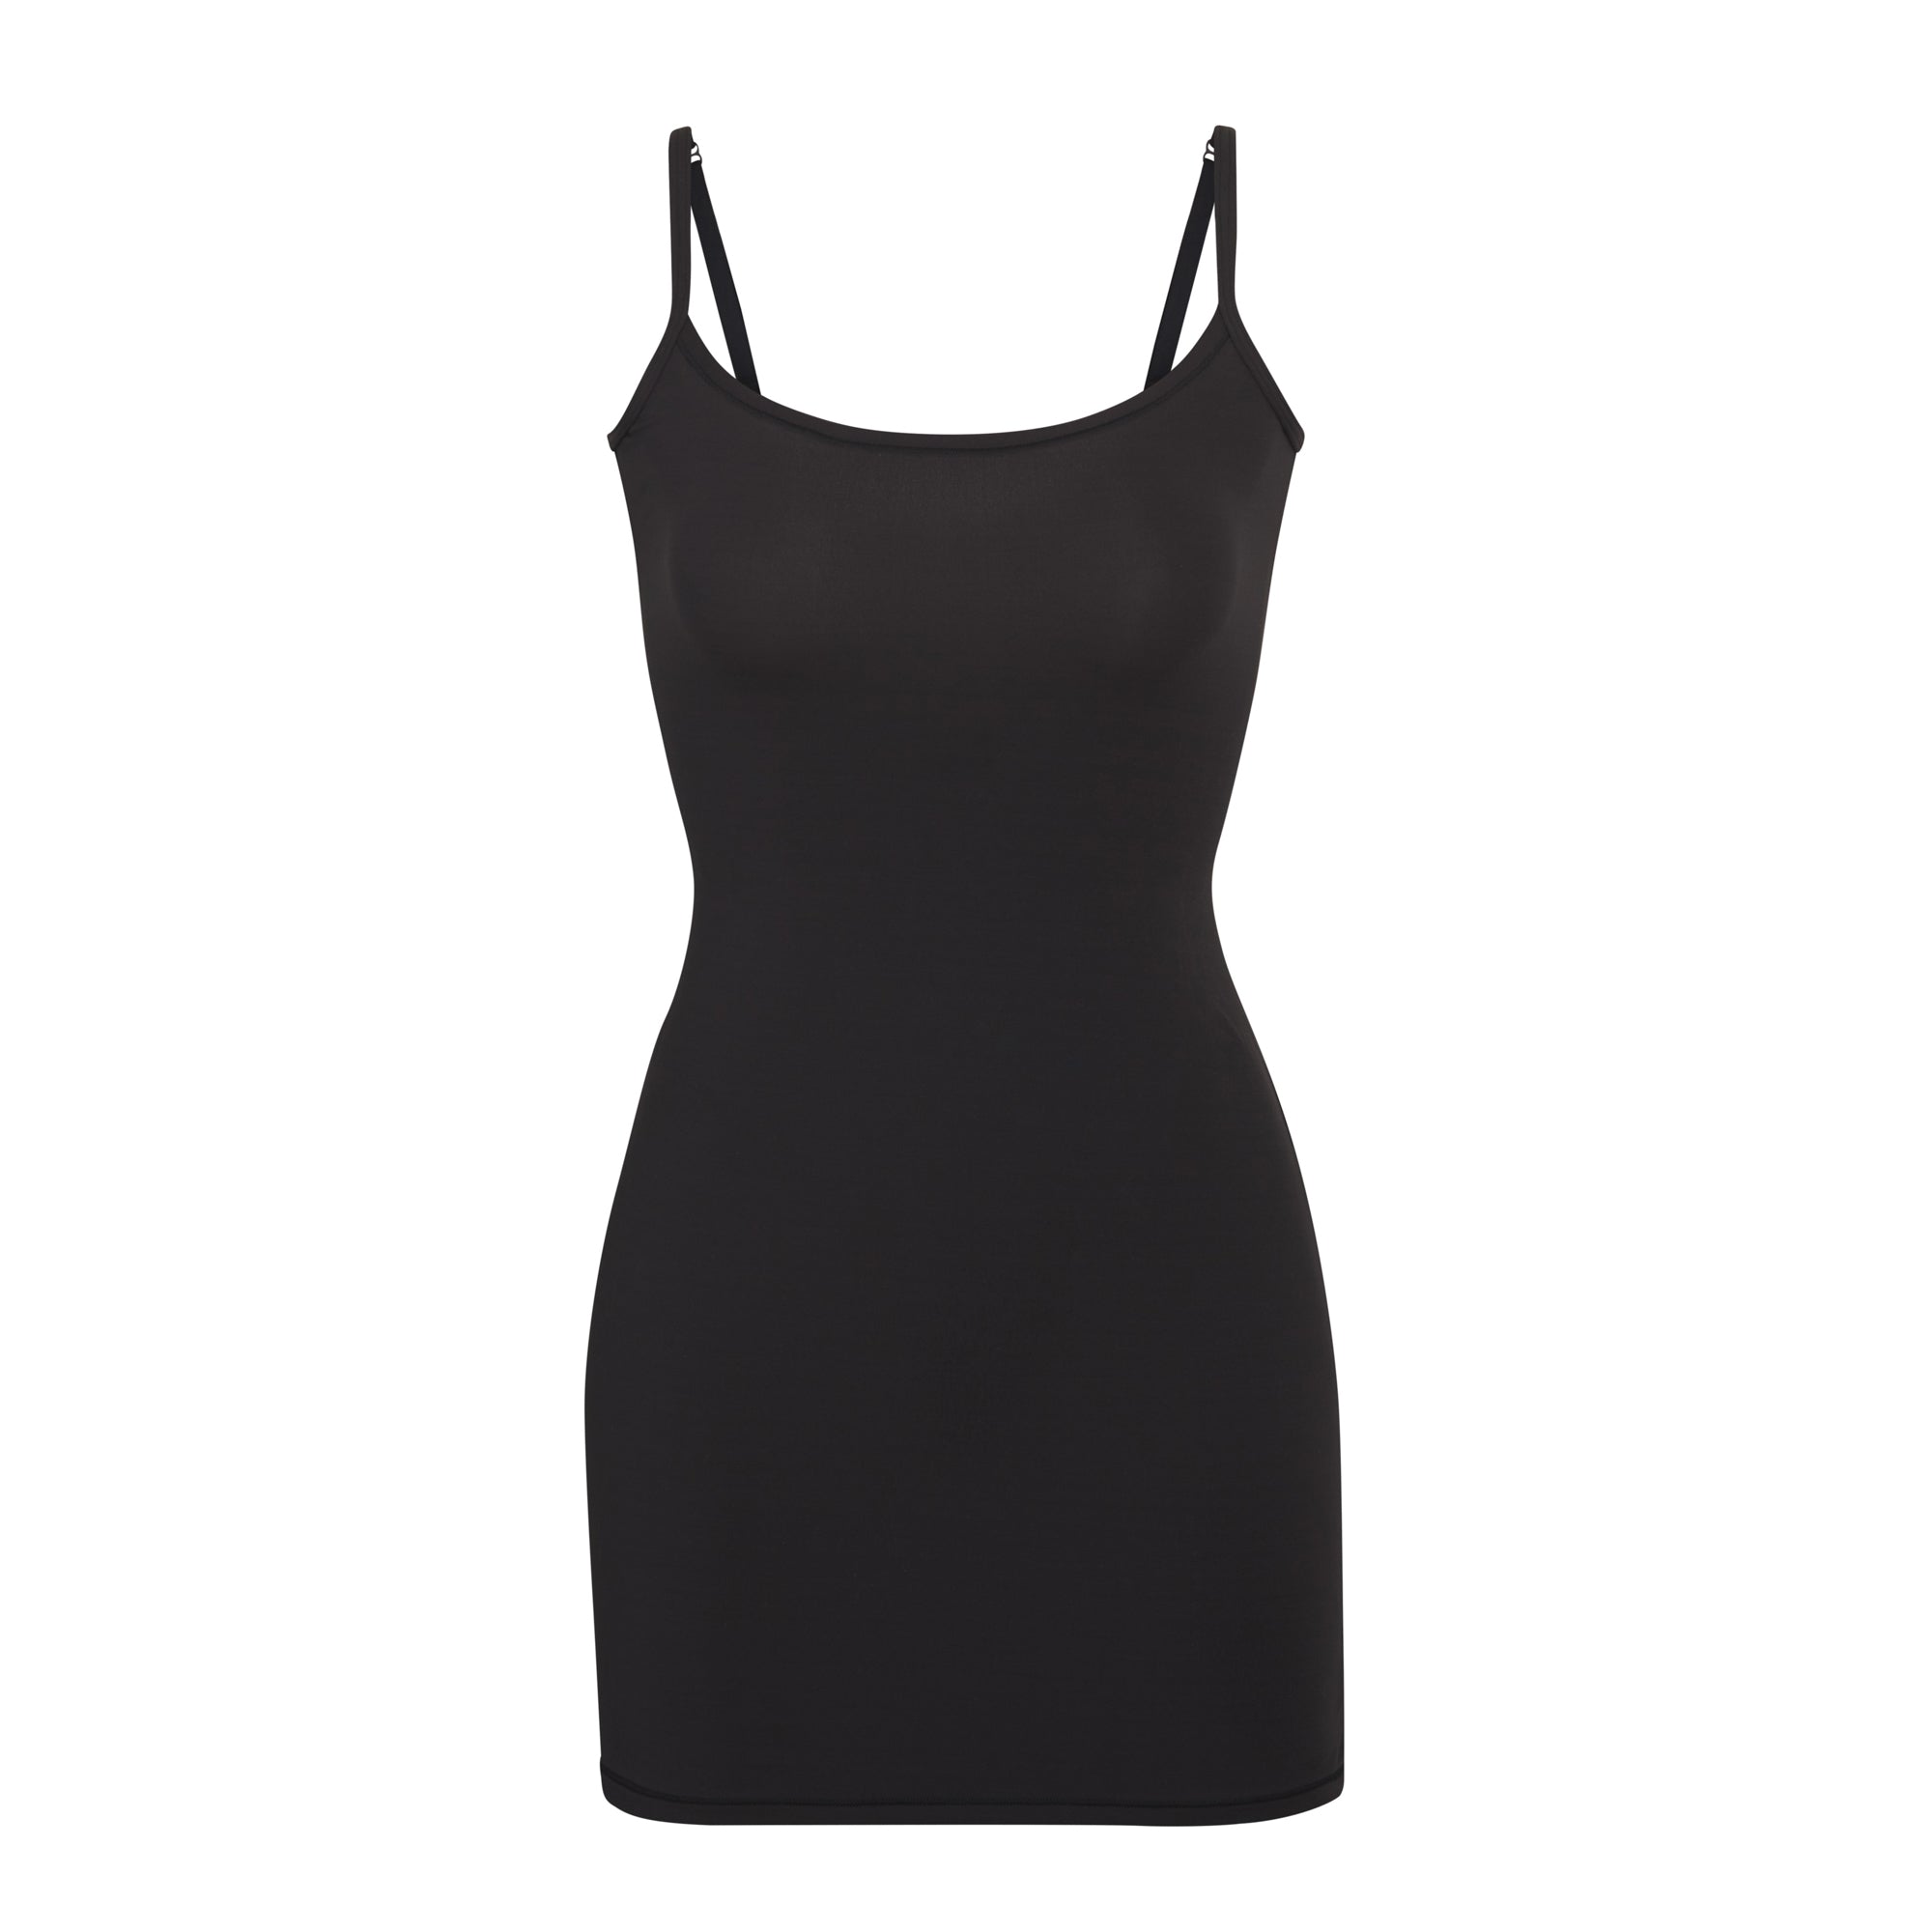 Sexy Black Strappy Dress - Scoop Neckline / Adjustable Straps / Trim Body  Fit / Back Strap